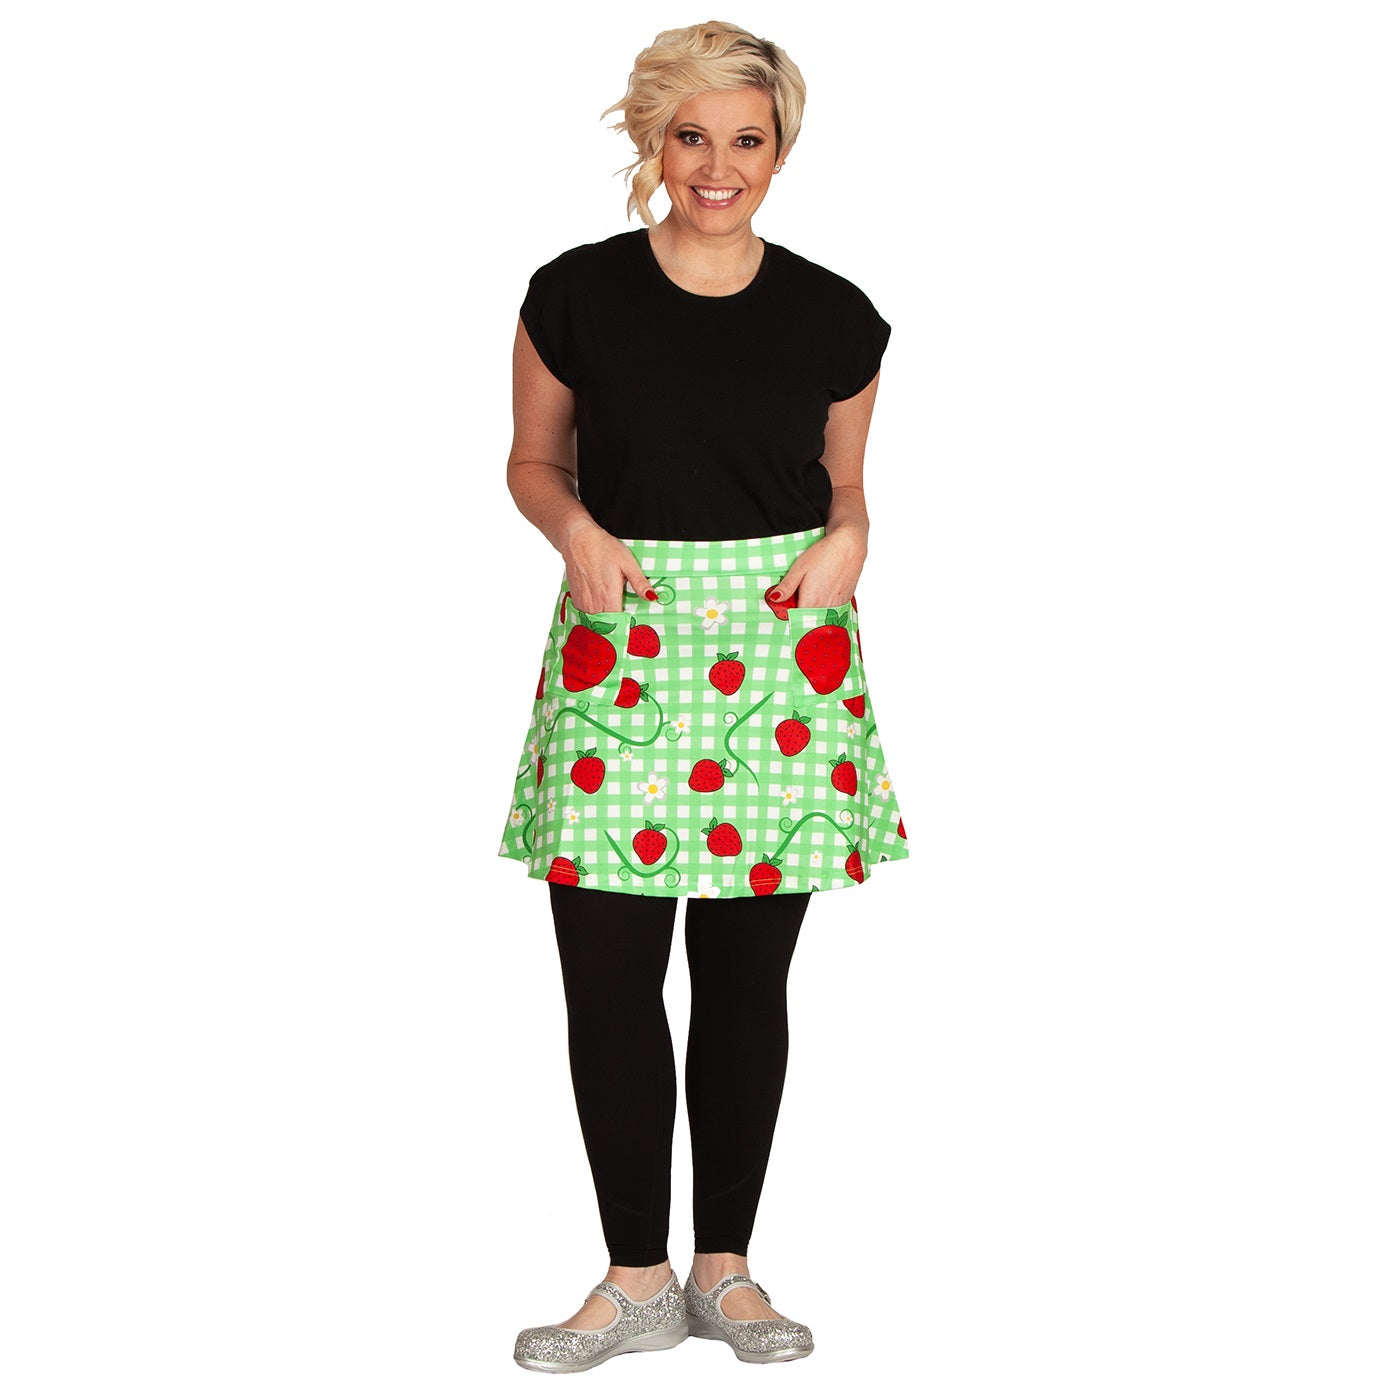 Berry Picnic Short Skirt by RainbowsAndFairies.com.au (Strawberry Shortcake - Green - Skirt With Pockets - Aline Skirt - Vintage Inspired - Kitsch) - SKU: CL_SHORT_BERRY_ORG - Pic-03